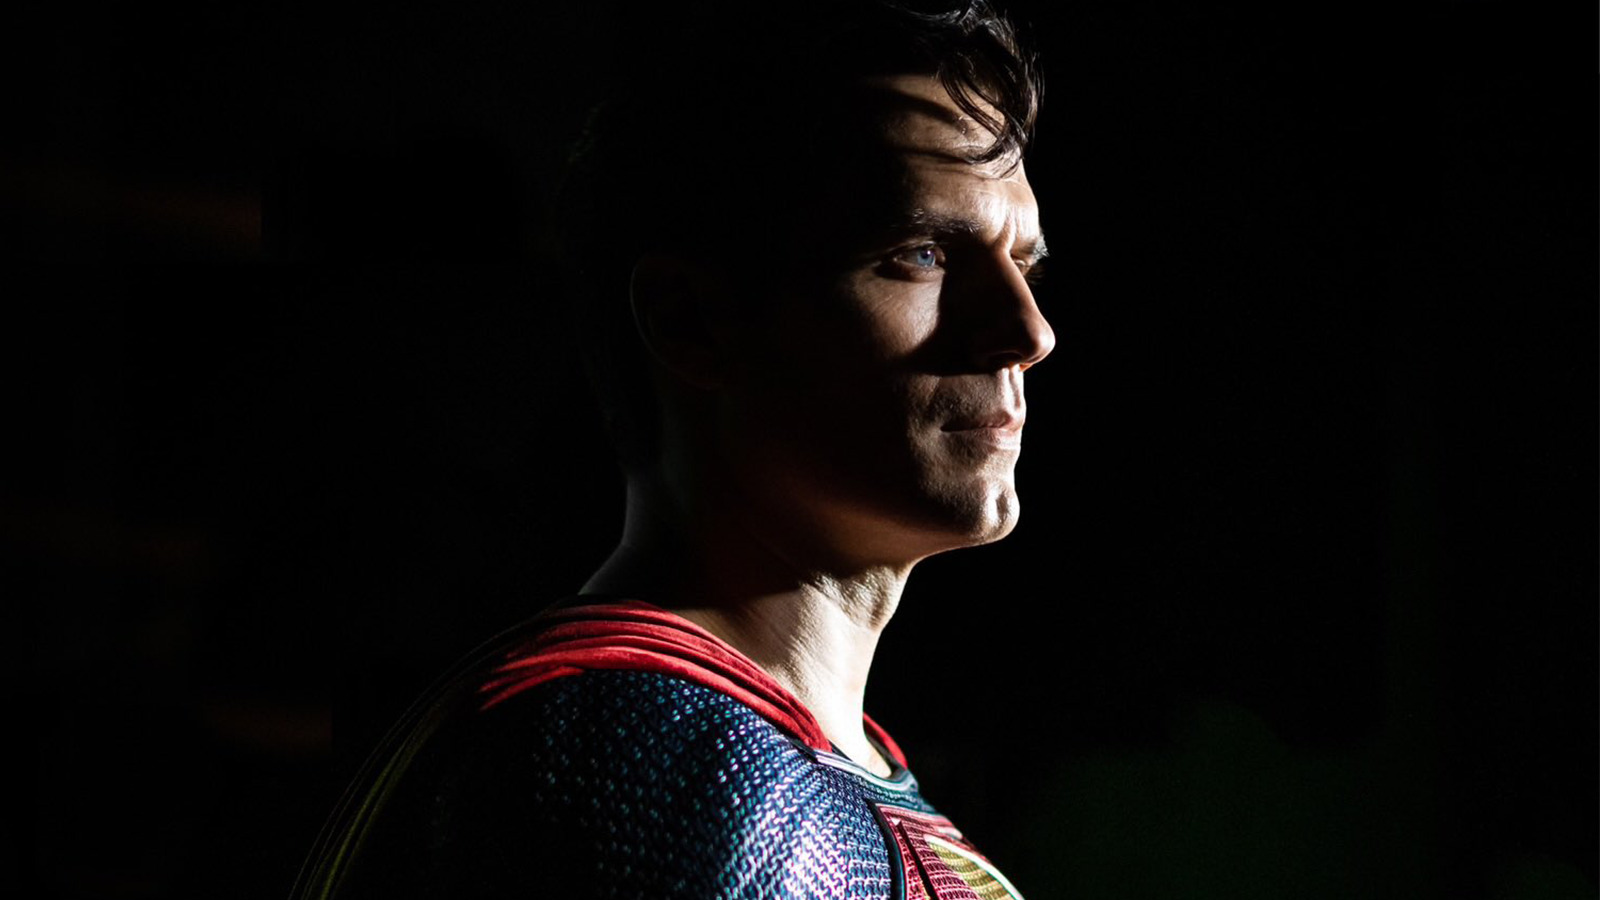 Exclusive: Which Superman Costume Will Henry Cavill Wear in Black Adam? -  Geekosity